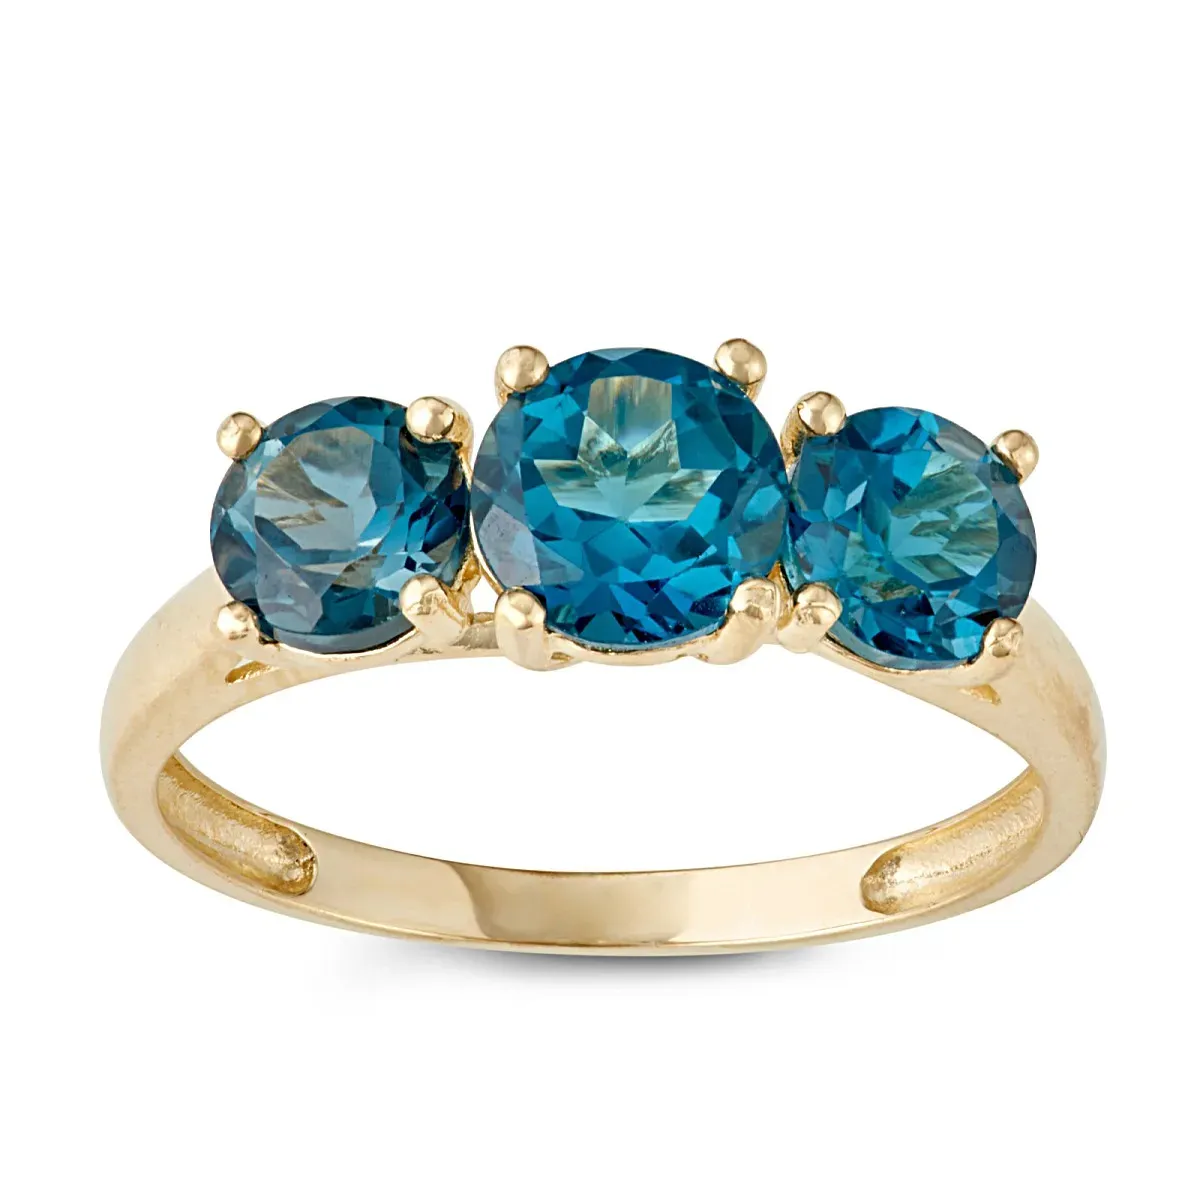 सेलेस्टियल ब्लूज़: लंदन ब्लू पुखराज 3-स्टोन 10K पीले सोने की अंगूठी | एक कालातीत रत्न पहनावा में लालित्य का त्रिगुट